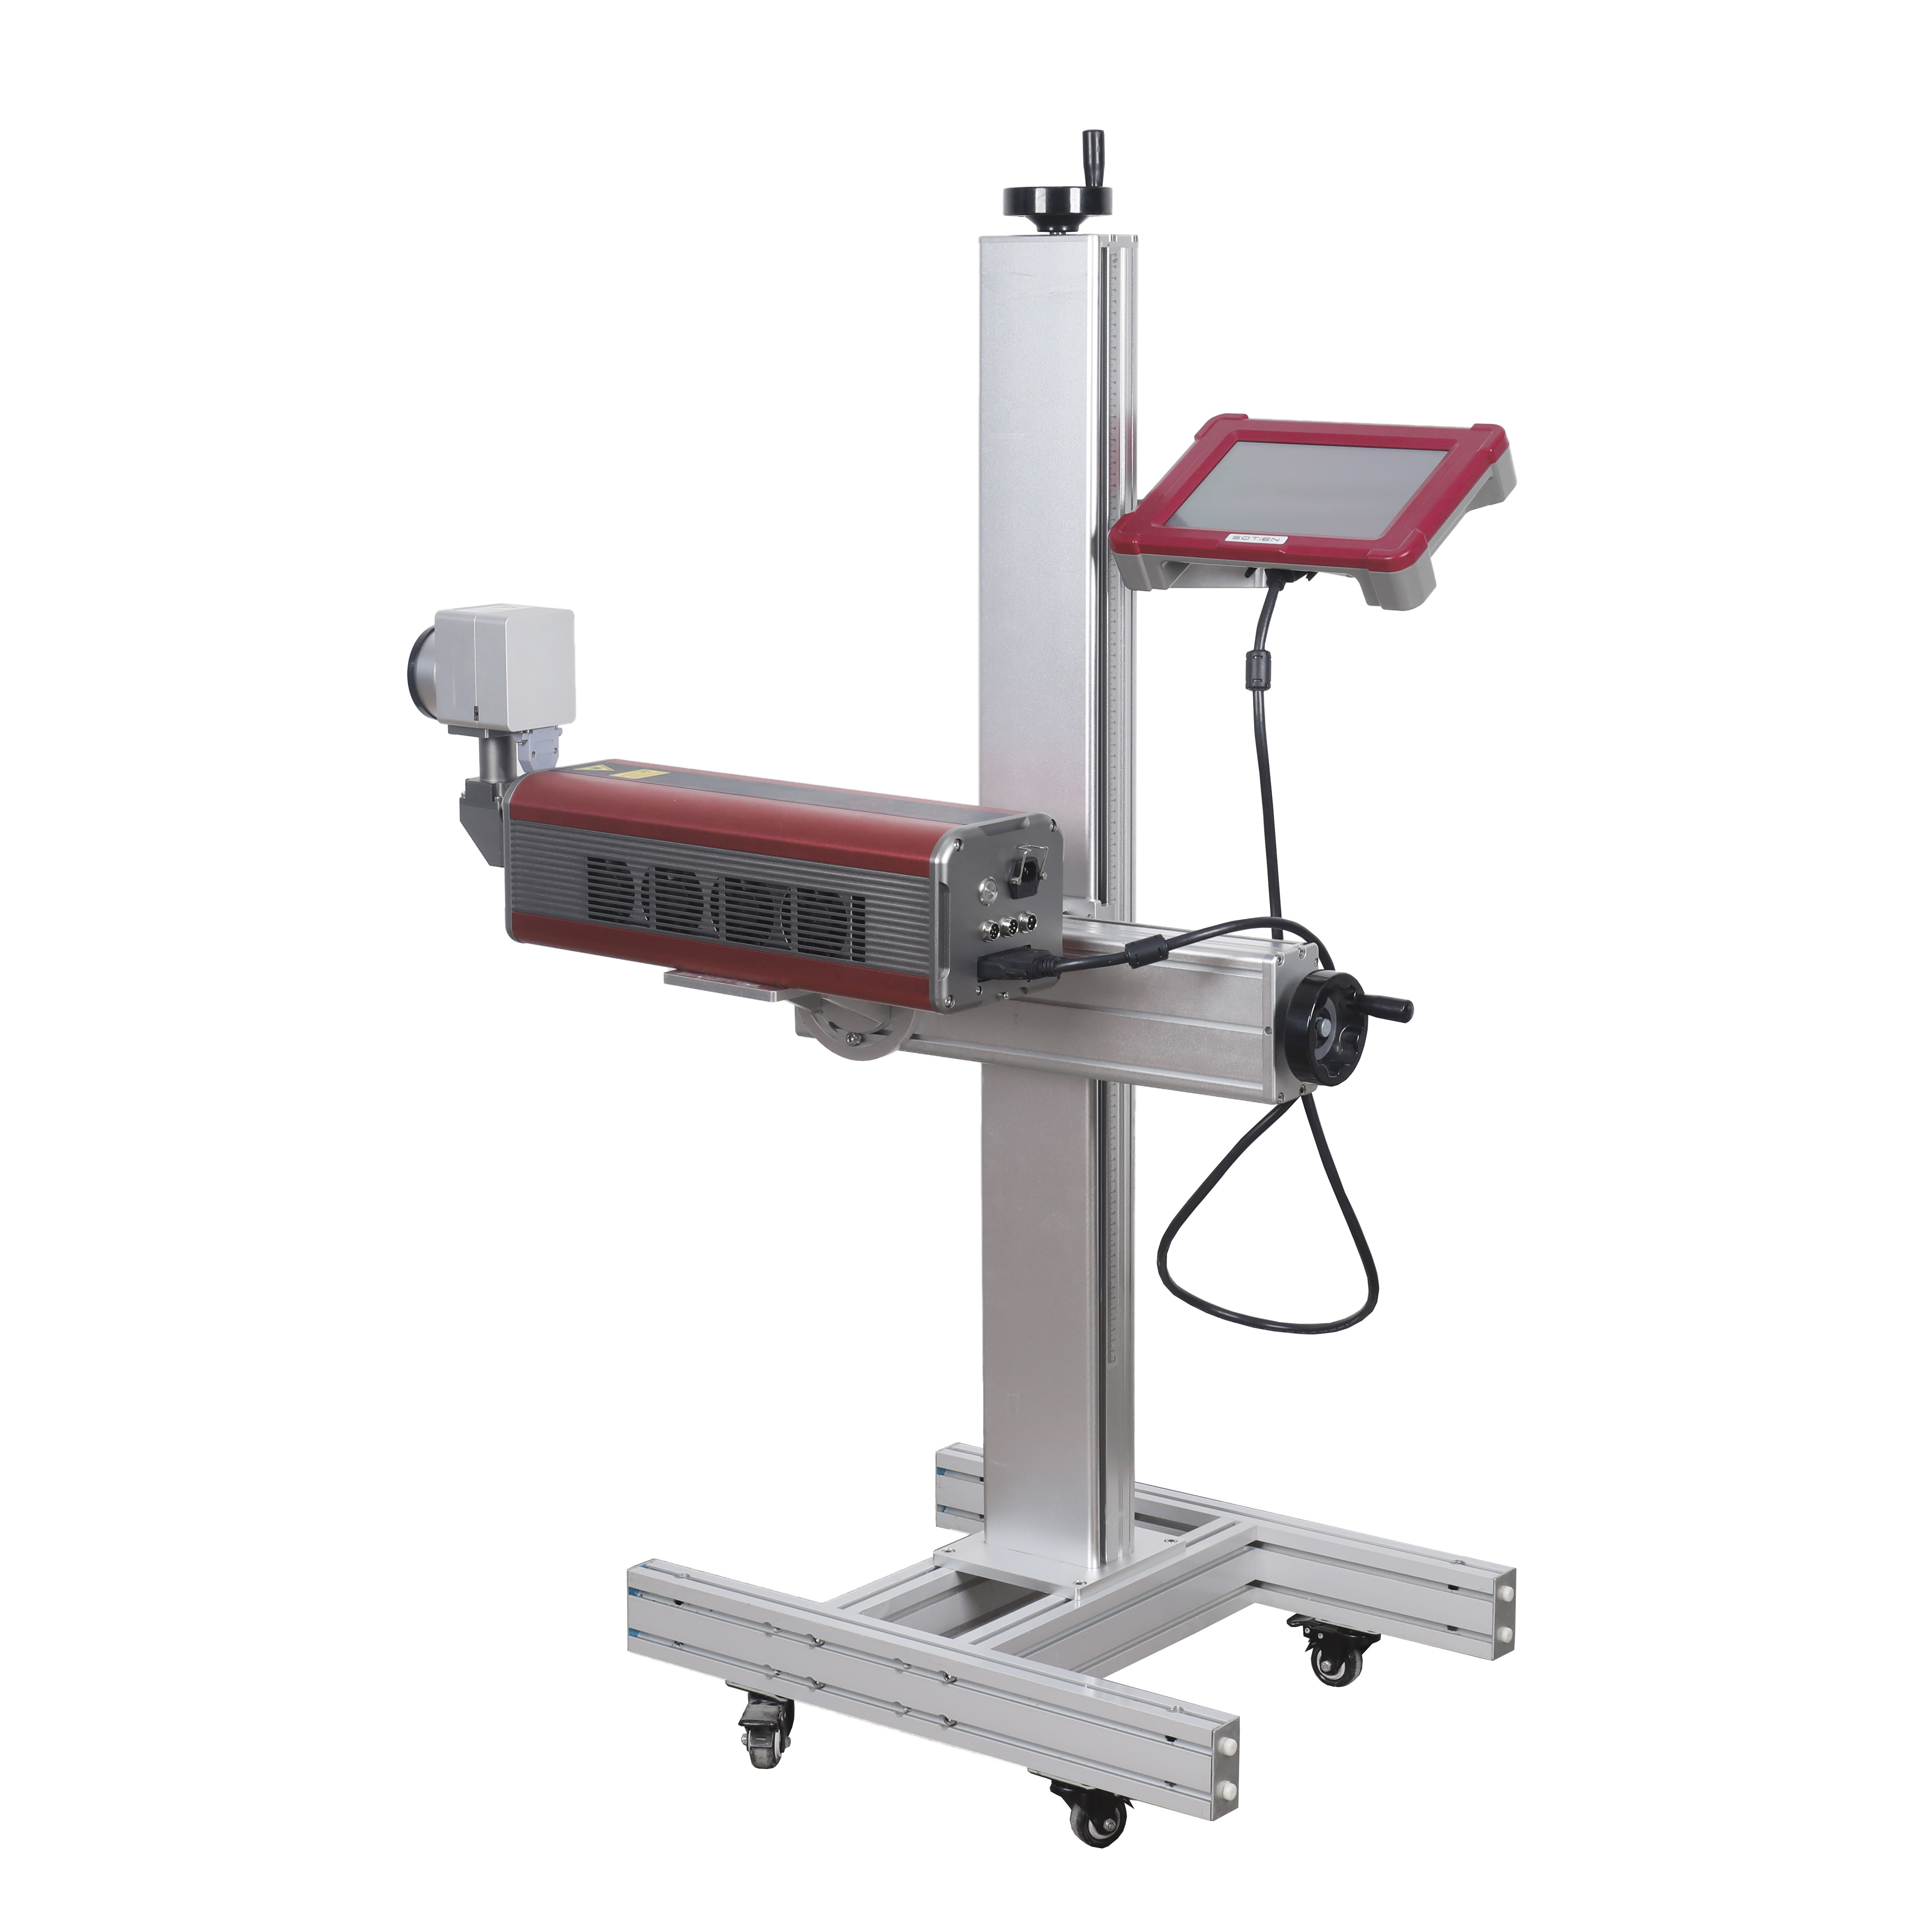 30W CO2 Laser Marking Machine Anodized Metal Engraving 110X110mm